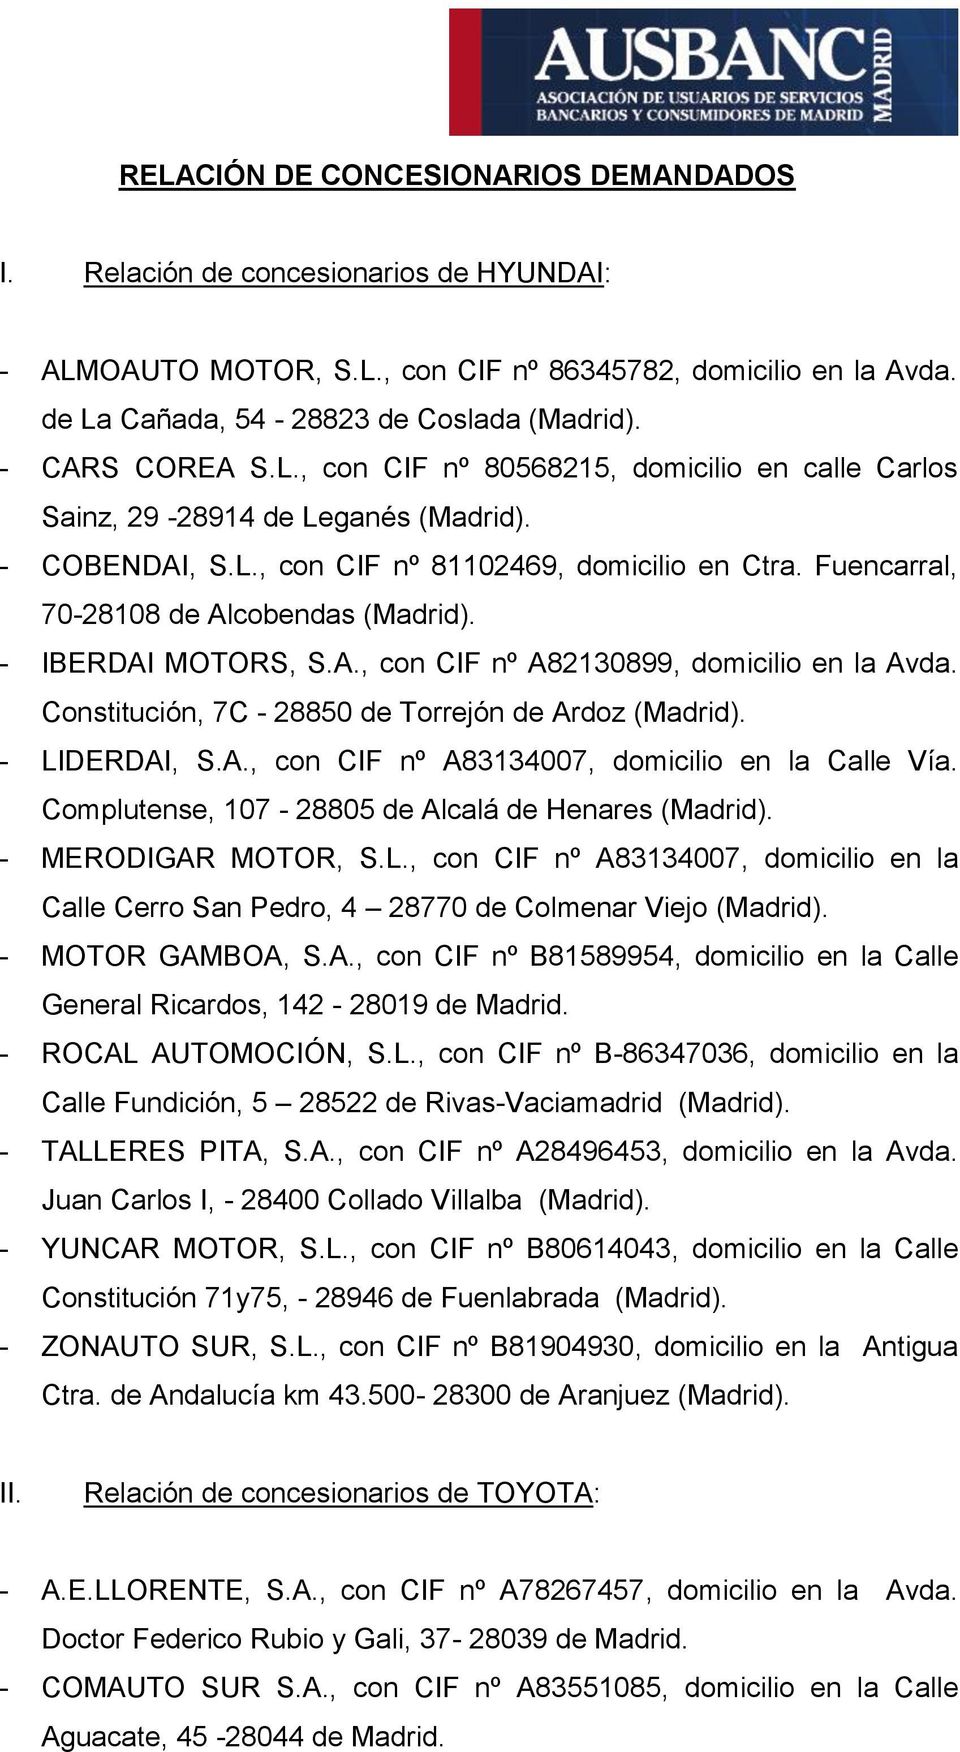 Constitución, 7C - 28850 de Torrejón de Ardoz - LIDERDAI, S.A., con CIF nº A83134007, domicilio en la Calle Vía. Complutense, 107-28805 de Alcalá de Henares - MERODIGAR MOTOR, S.L., con CIF nº A83134007, domicilio en la Calle Cerro San Pedro, 4 28770 de Colmenar Viejo - MOTOR GAMBOA, S.